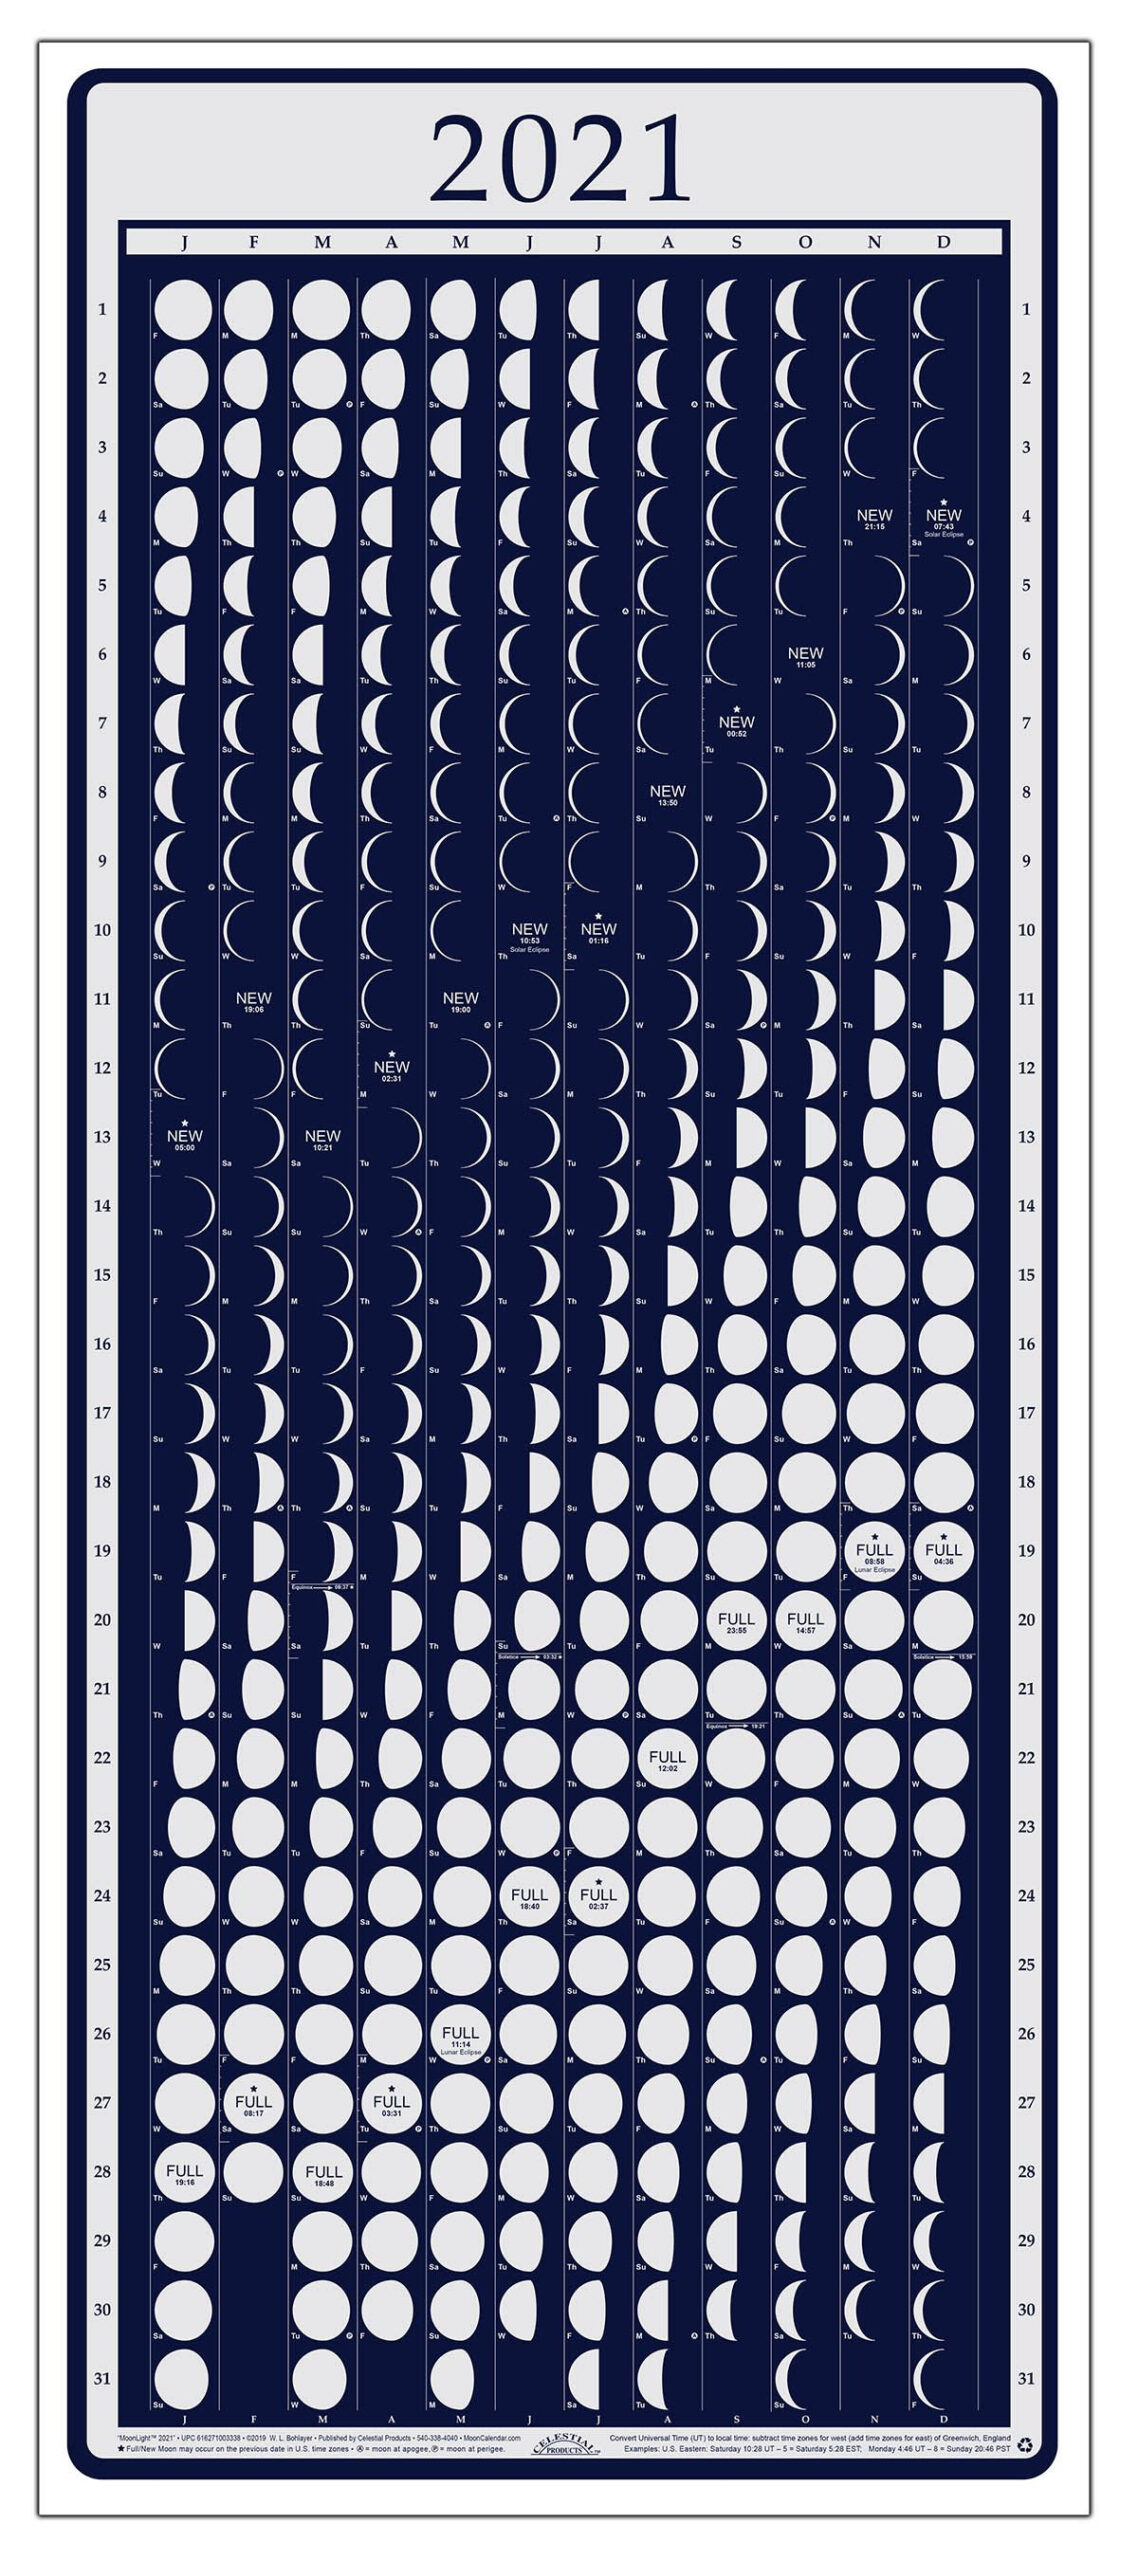 2021 Moonphase Calendar